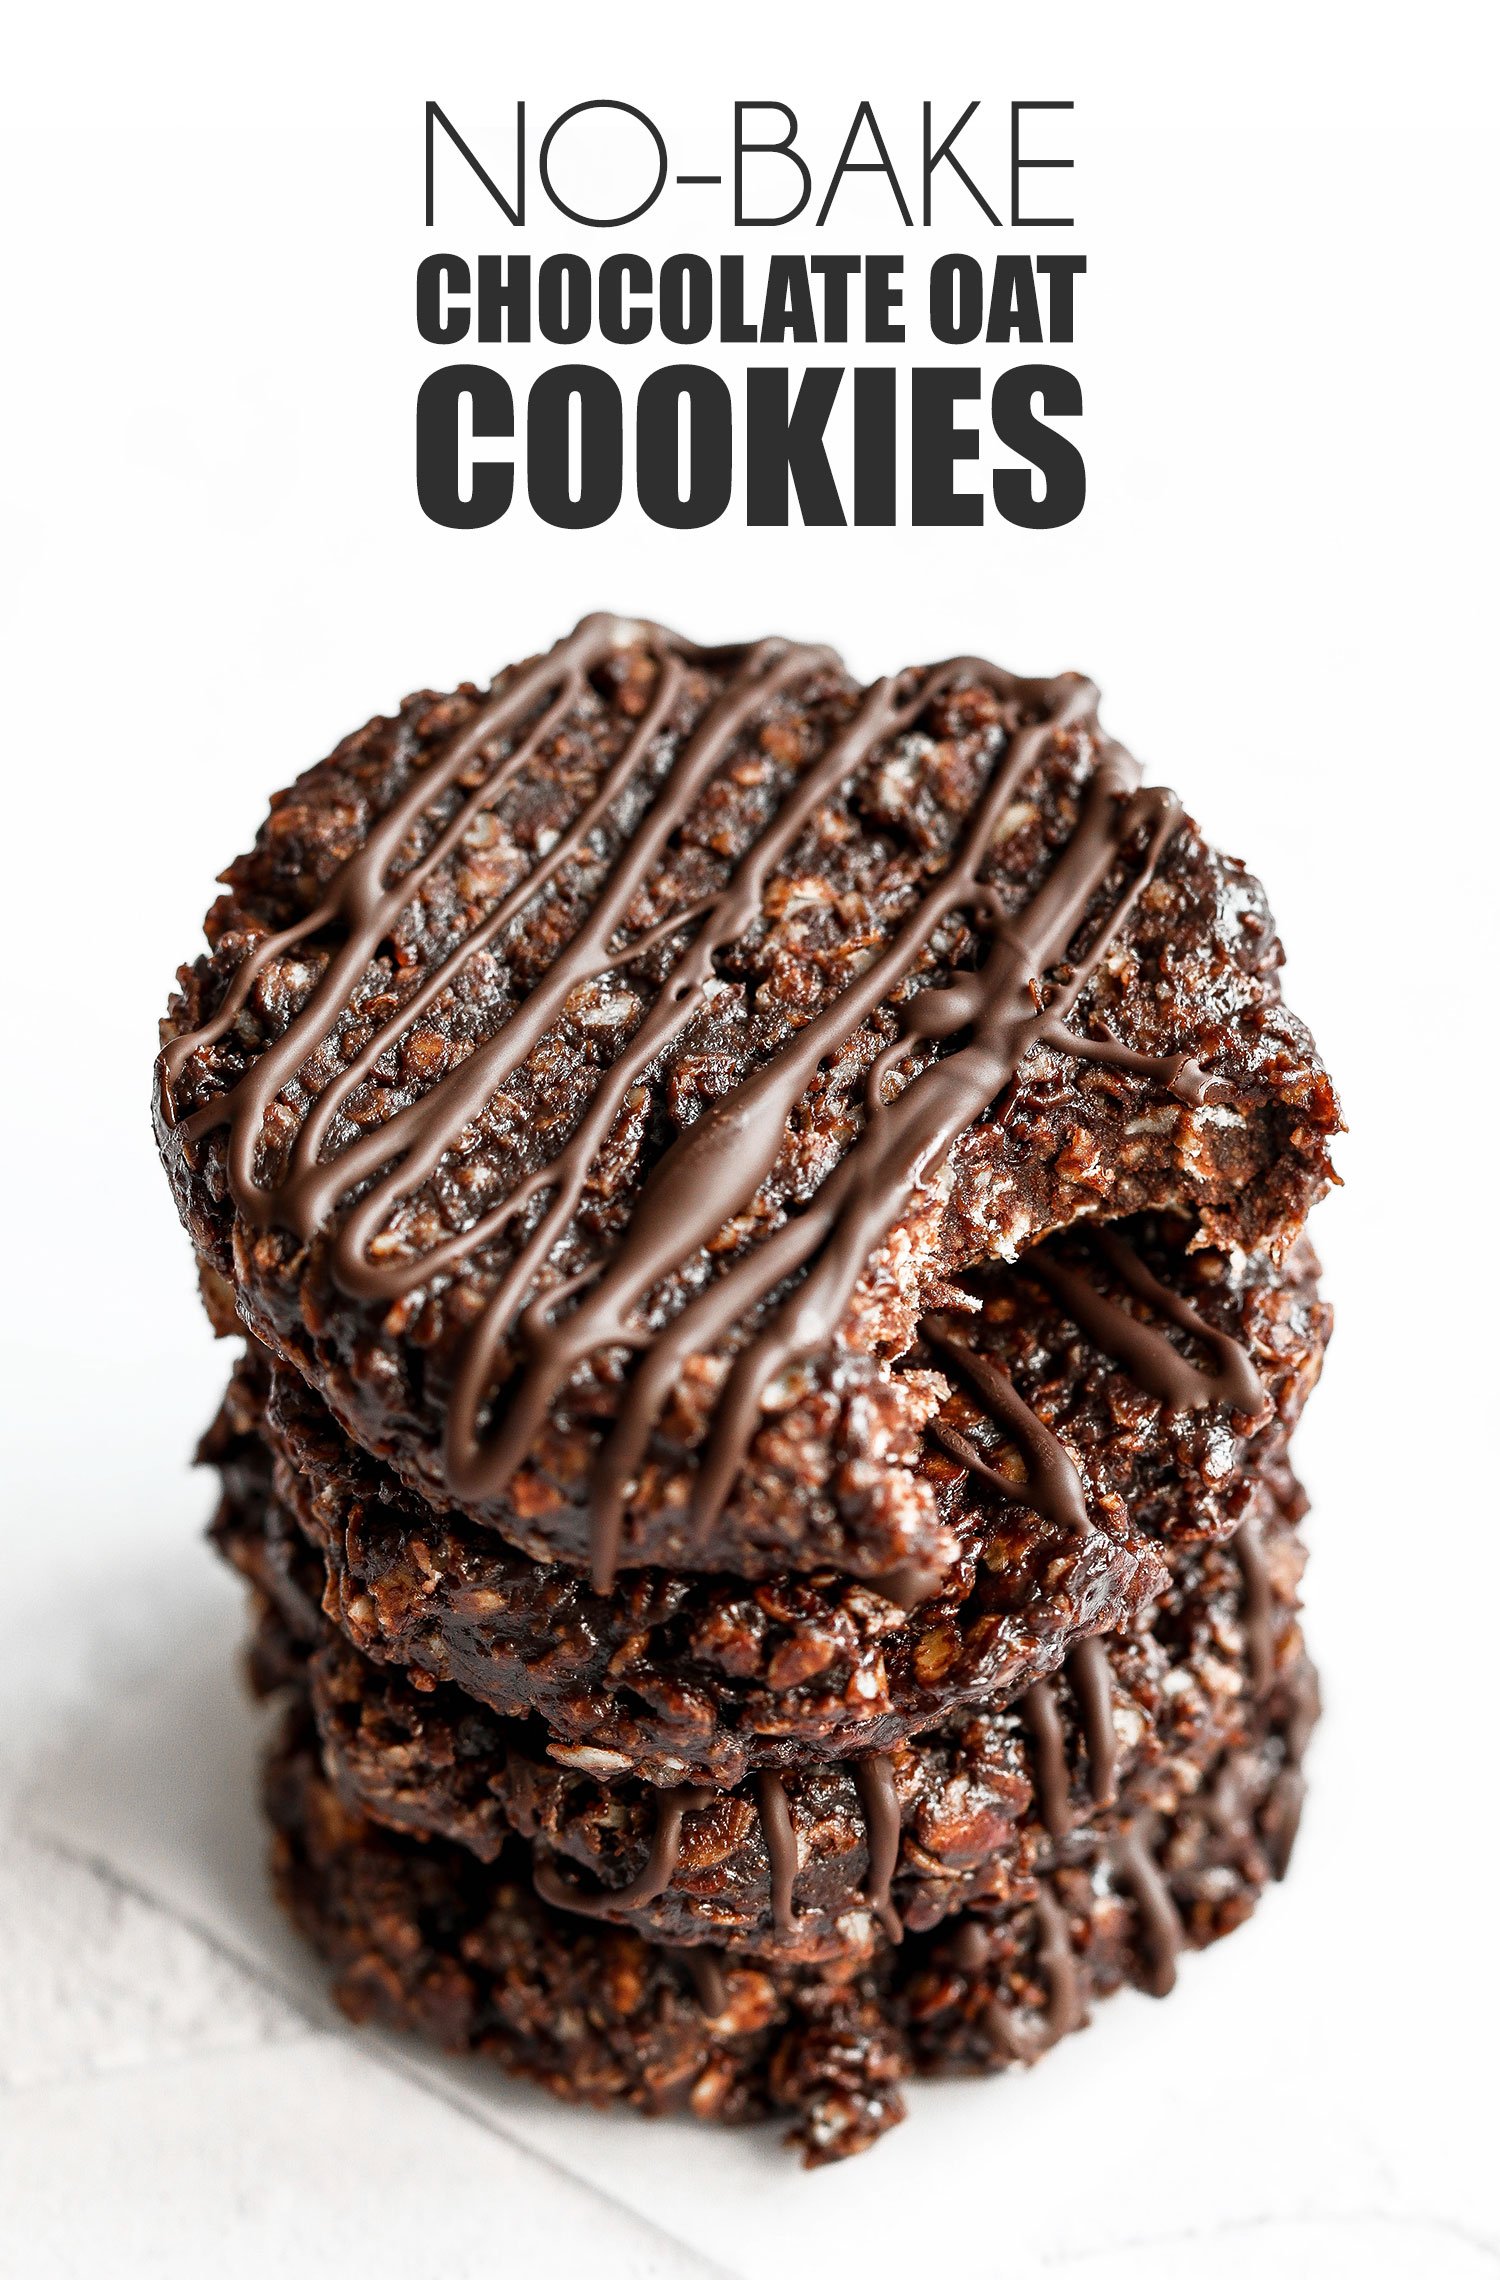 No-bake Chocolate Oat Cookies